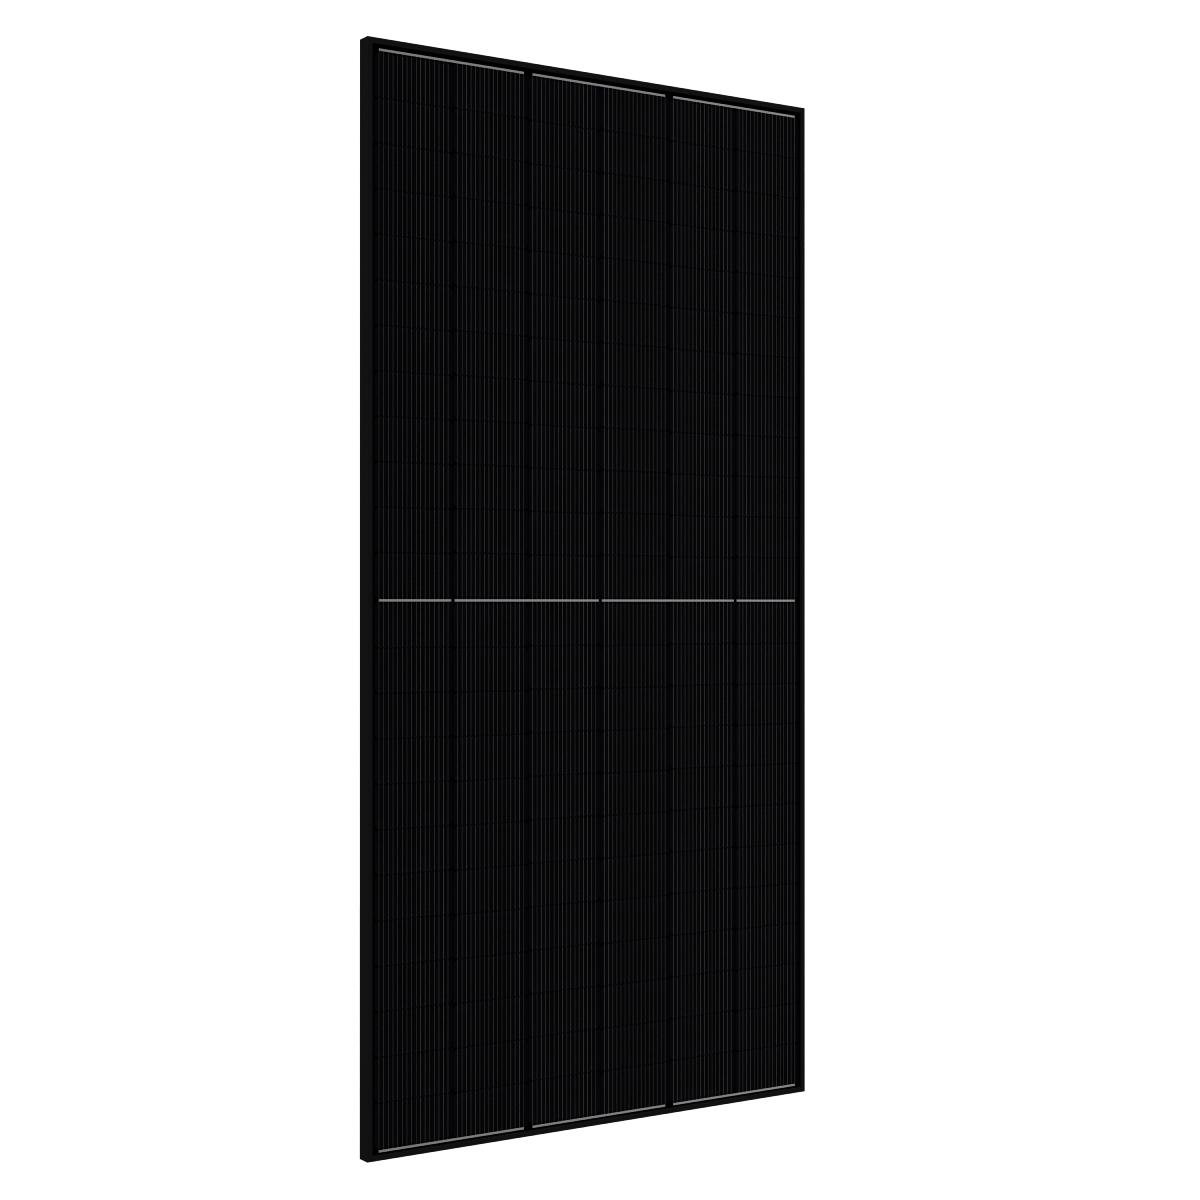 TommaTech 575Wp 144TNFB M10 TopCon Dark Series Solar Panel